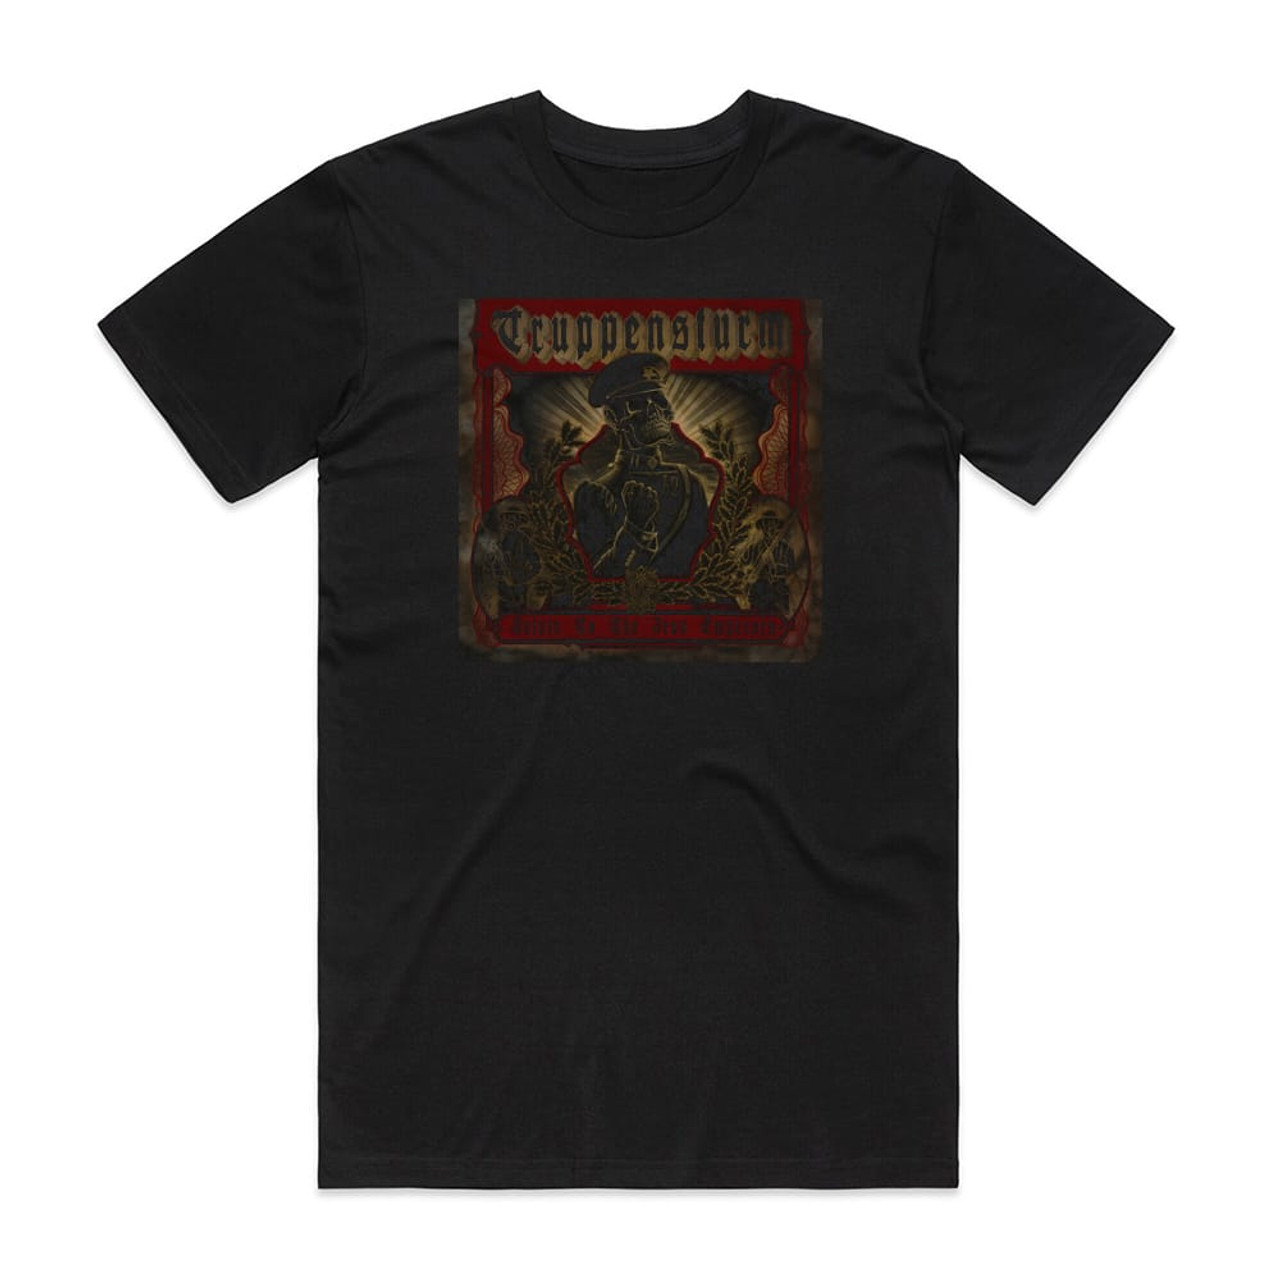 Truppensturm Salute Iron Album Black Emperors The T-Shirt Cover To